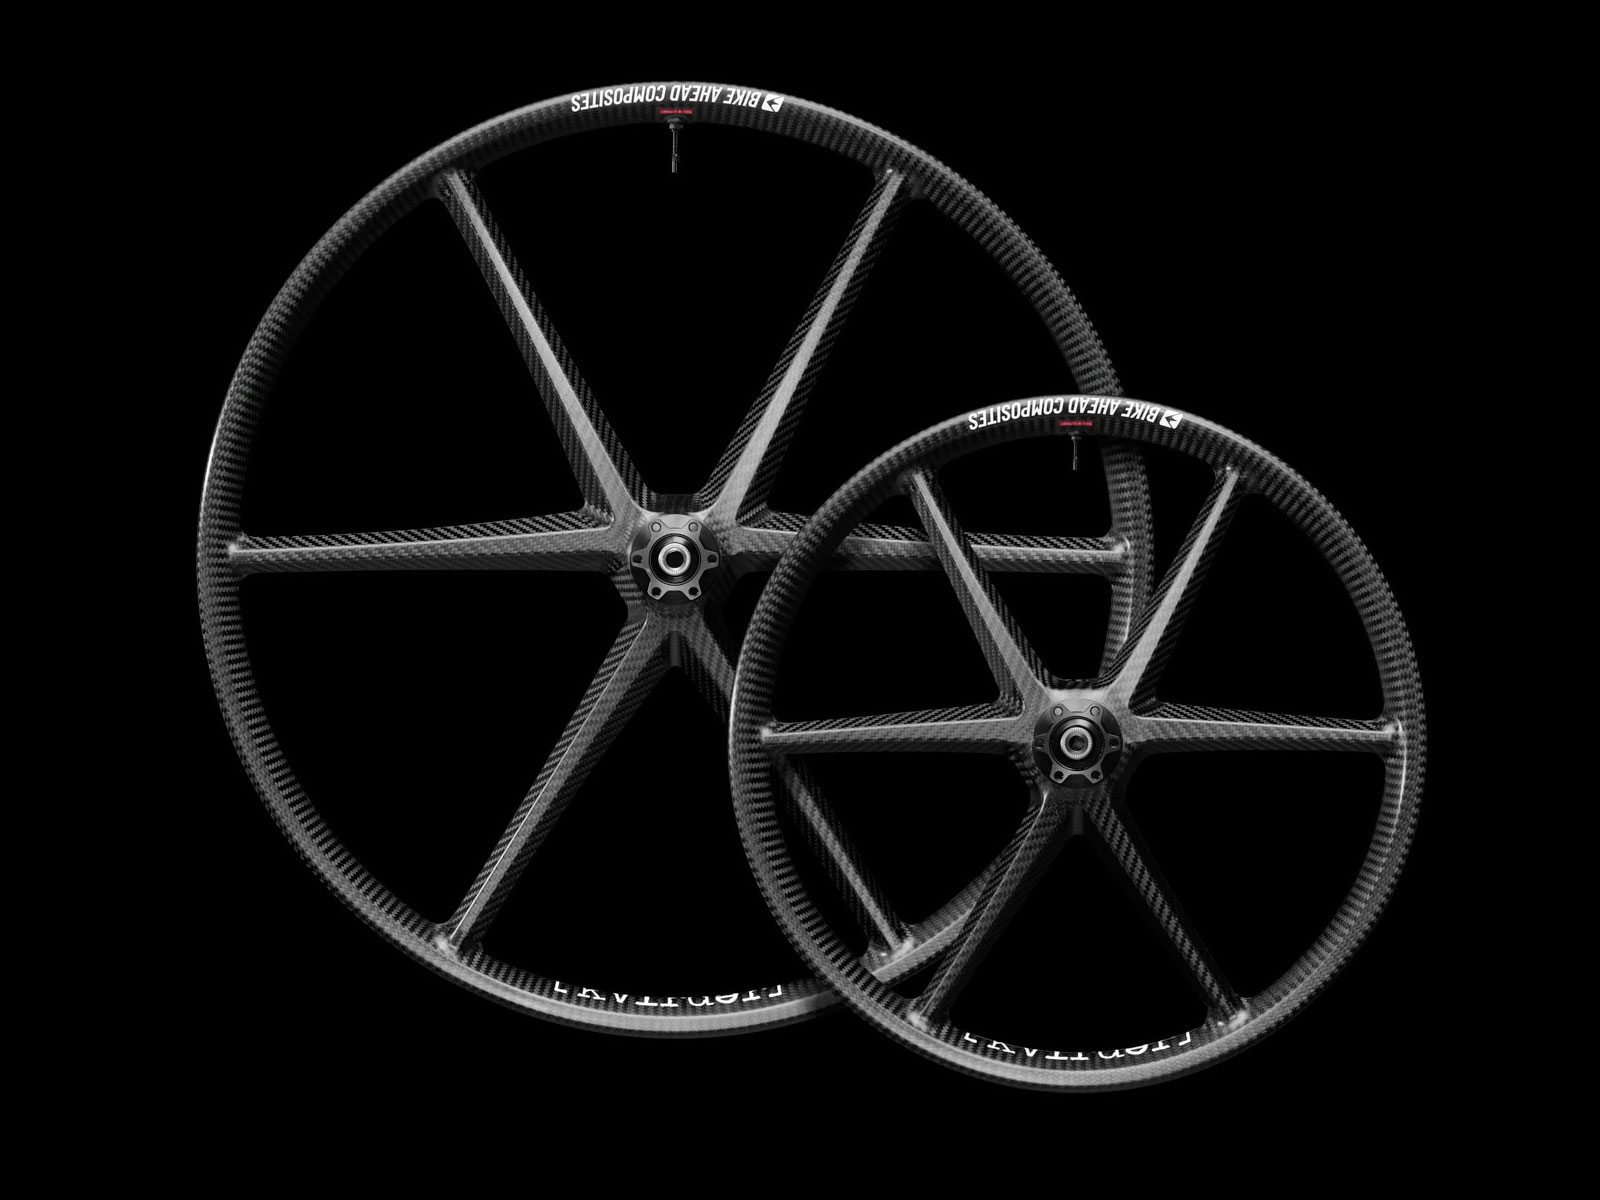 Bike Ahead Biturbo Cargo ultralight ultra-strong 6-spoke monocoque carbon wheels for cargo ebikes, 20" + 26" pair